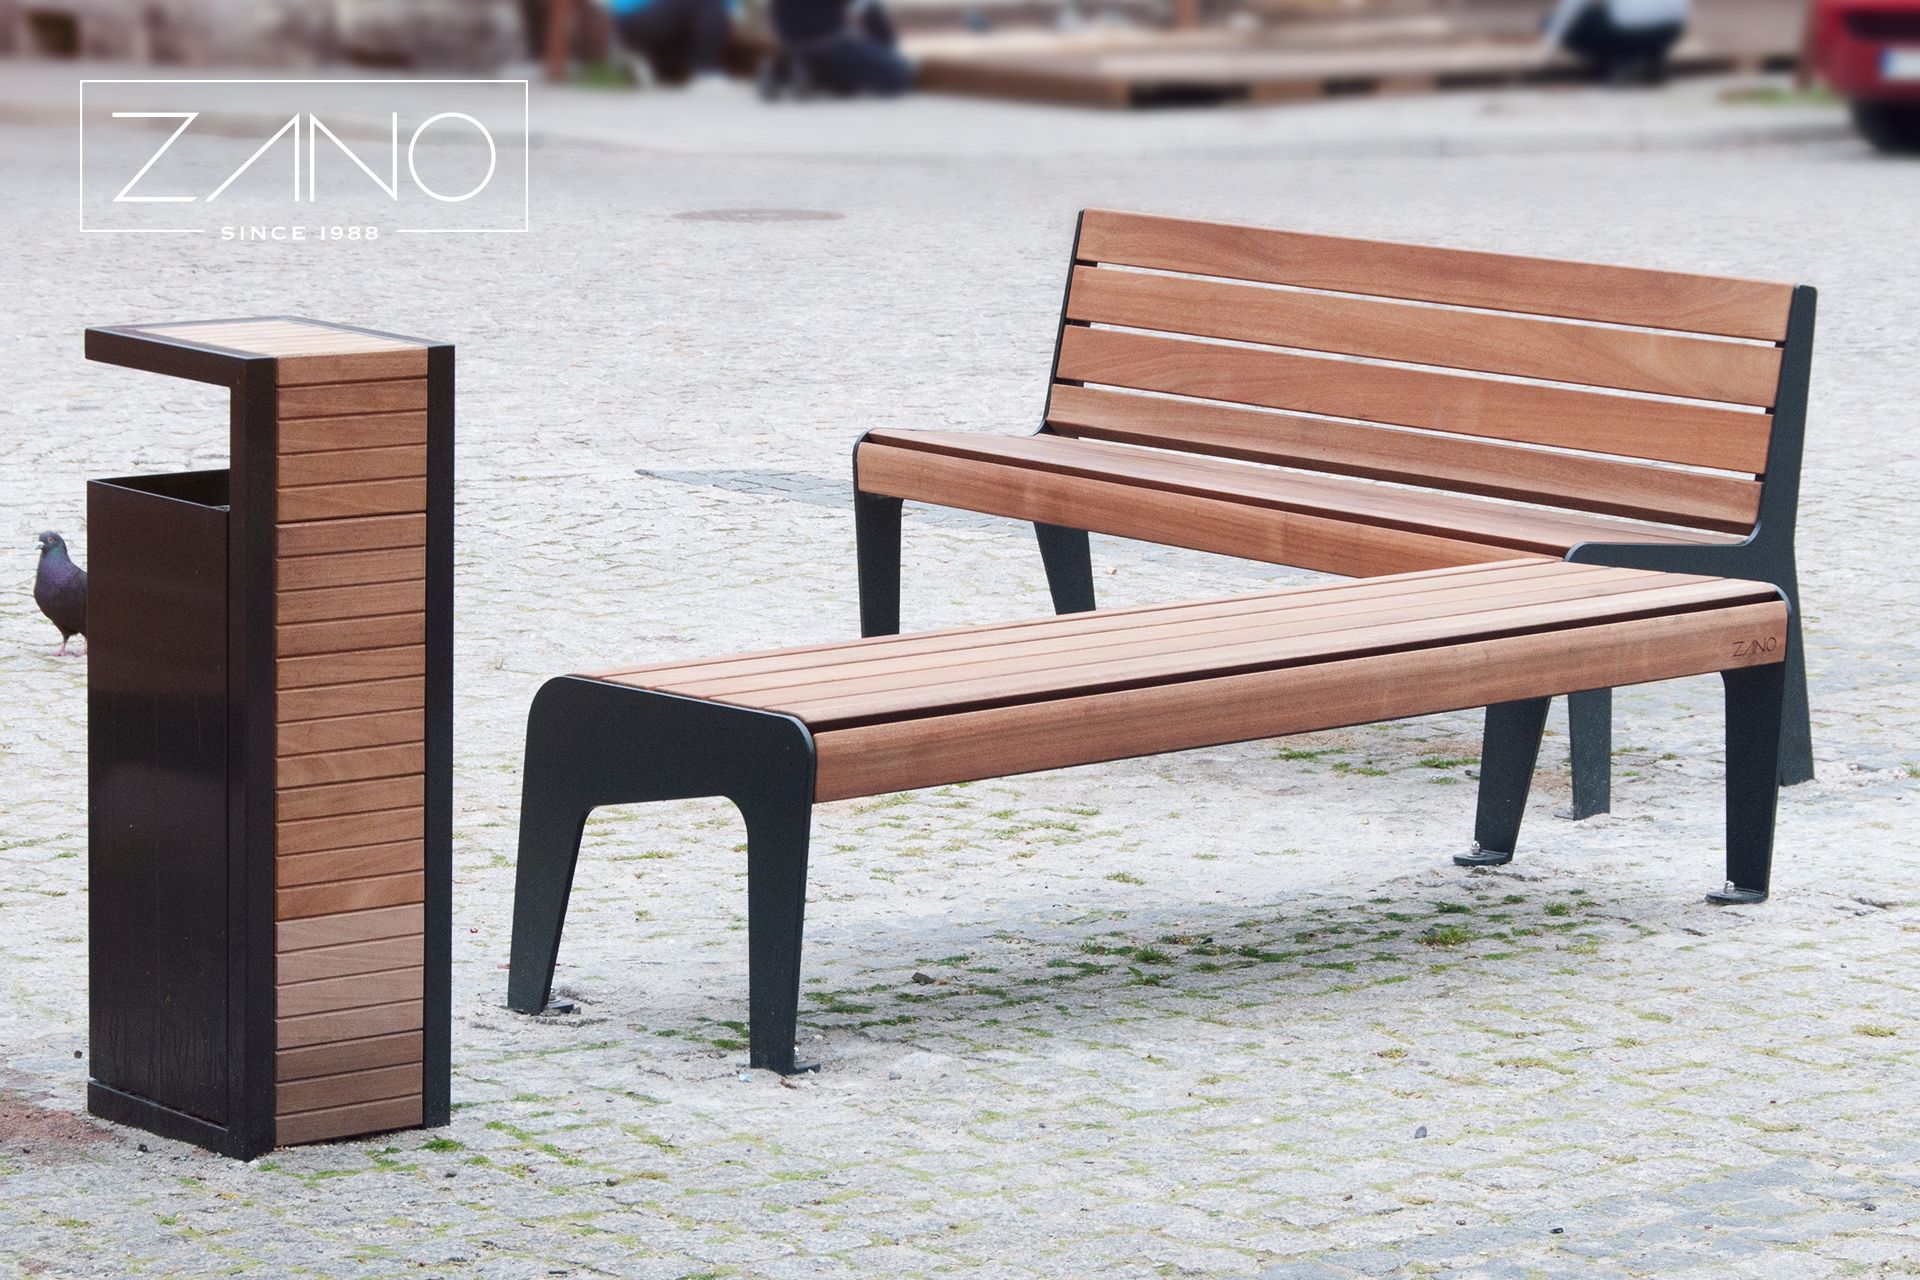 Street furniture made of steel and hardwood